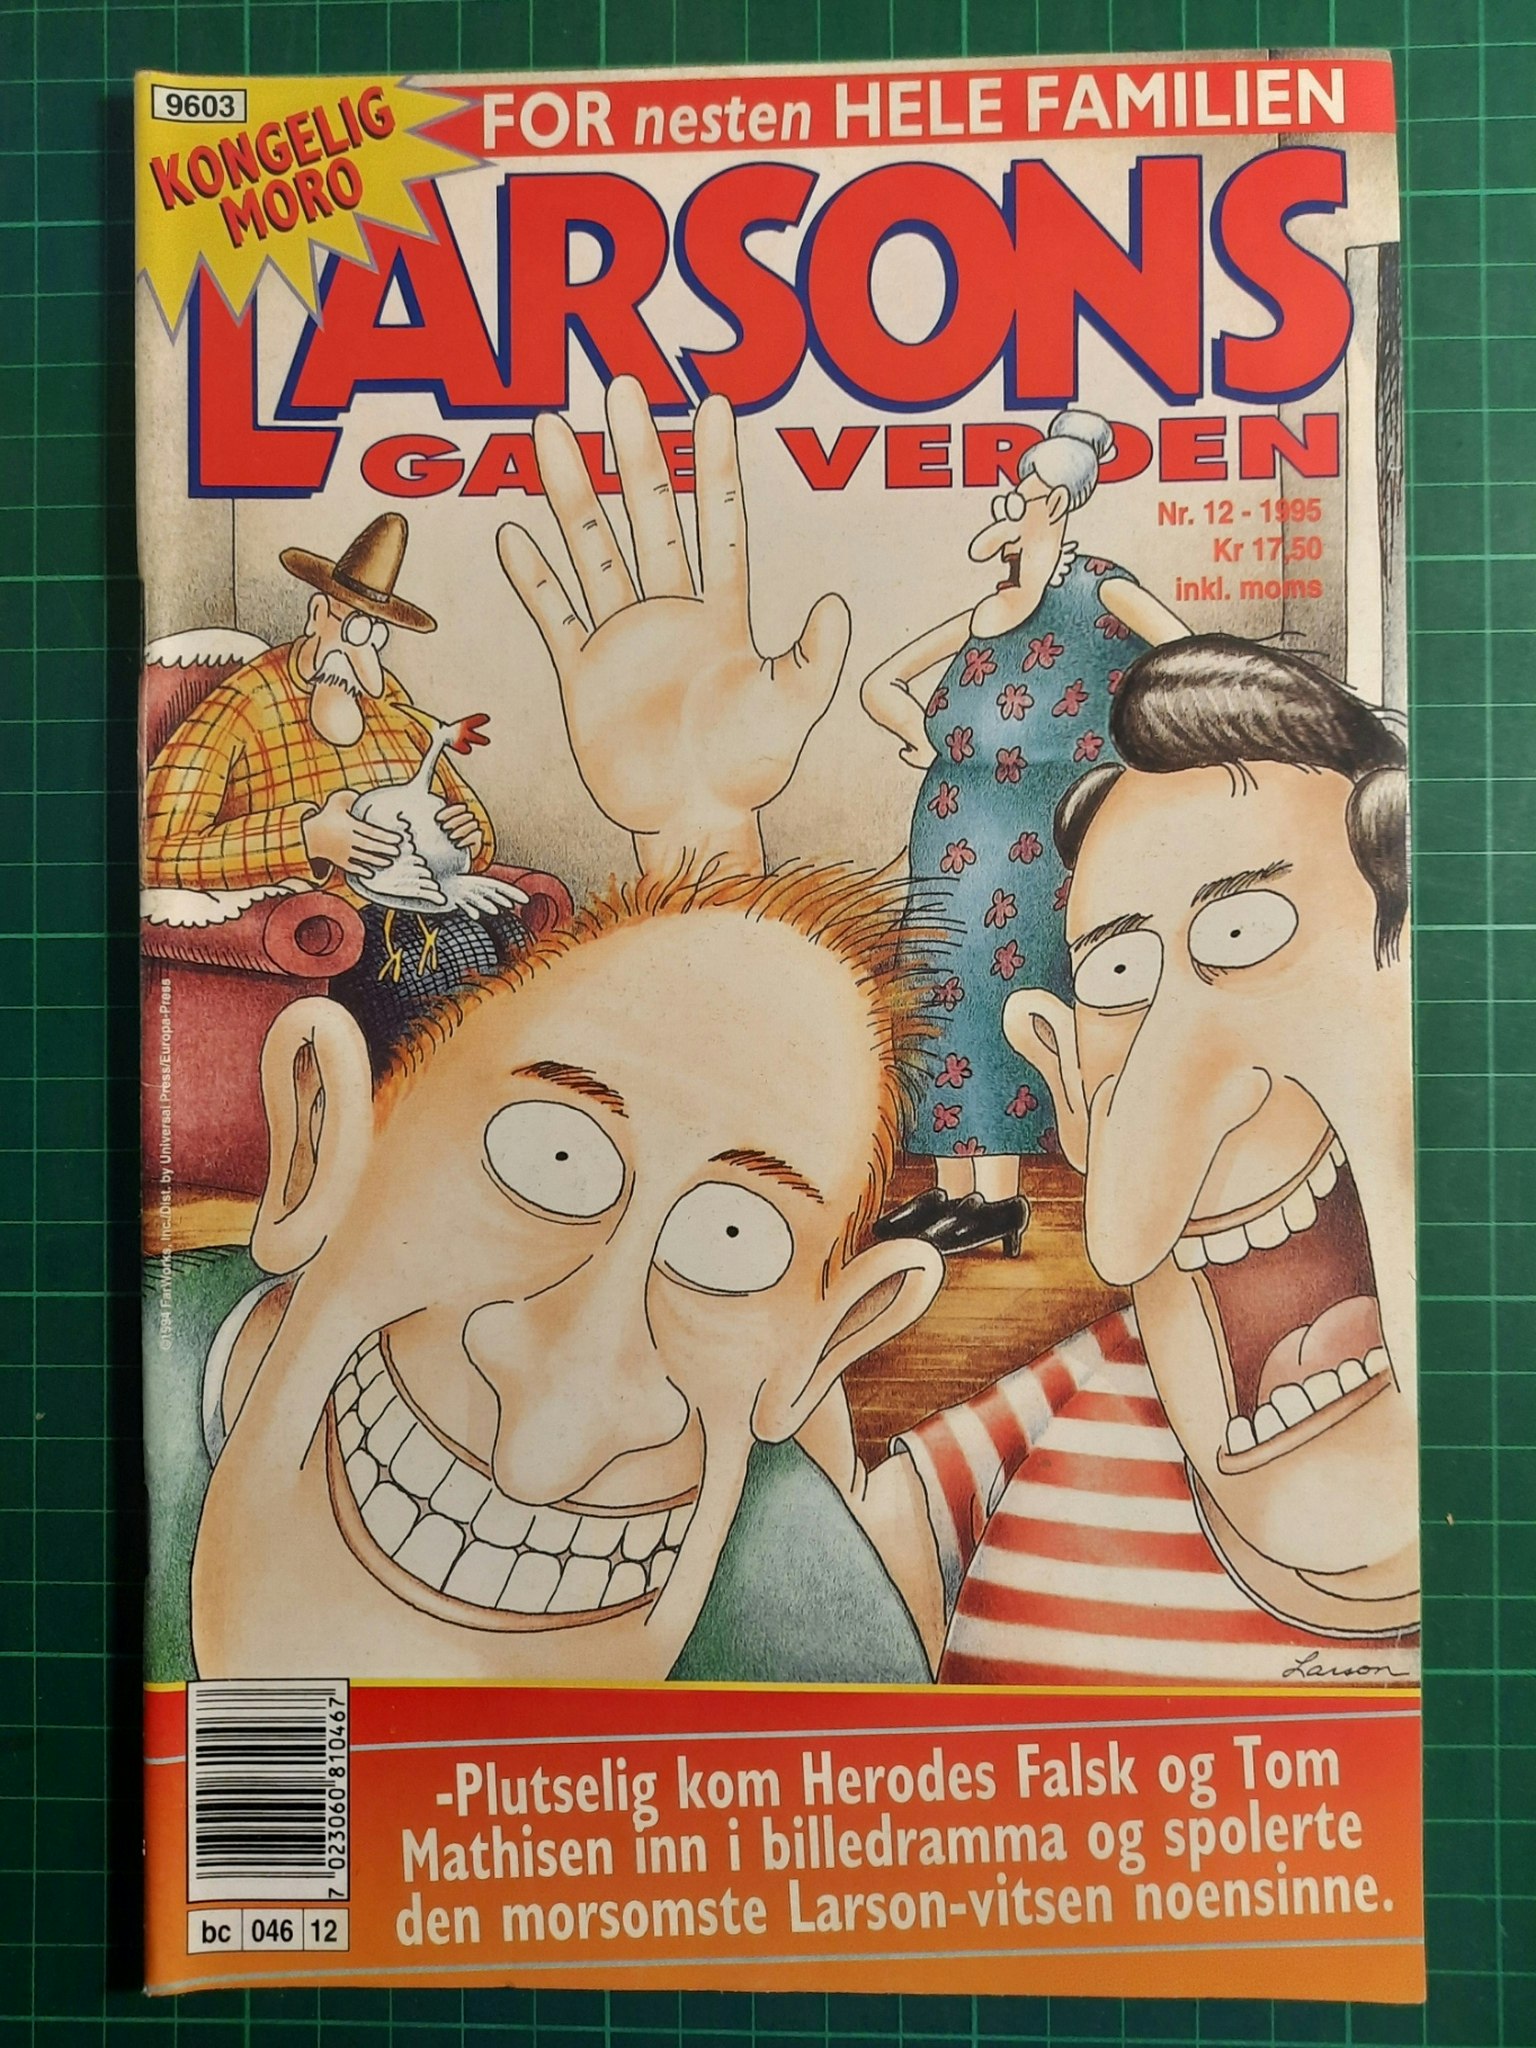 Larsons gale verden 1995 - 12 m/poster